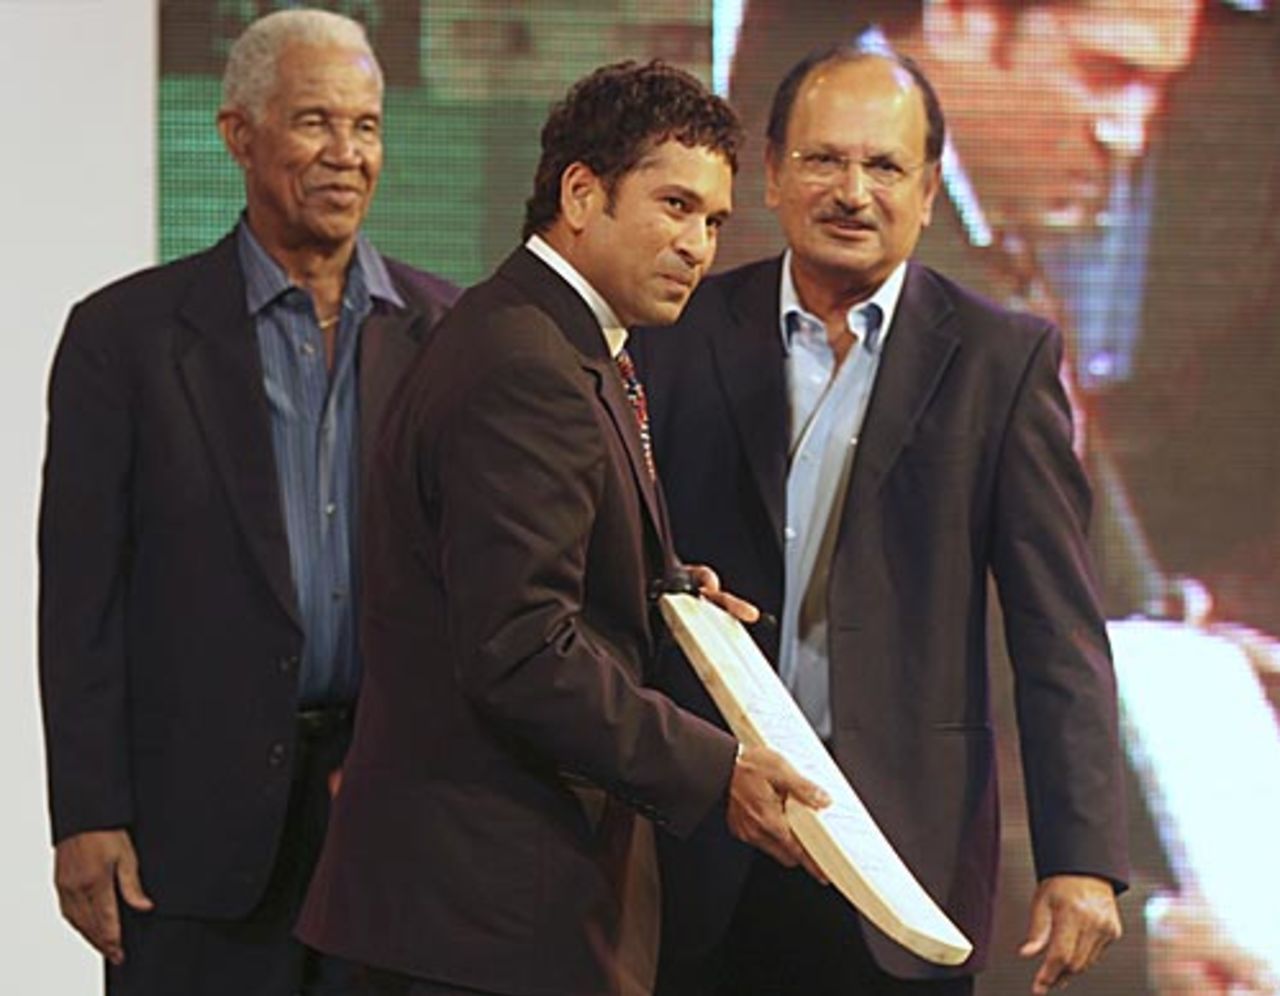 Sachin Tendulkar holds an autographed bat presented to him, as Ajit Wadekar and Garry Sobers look on, Mumbai, March 4, 2010